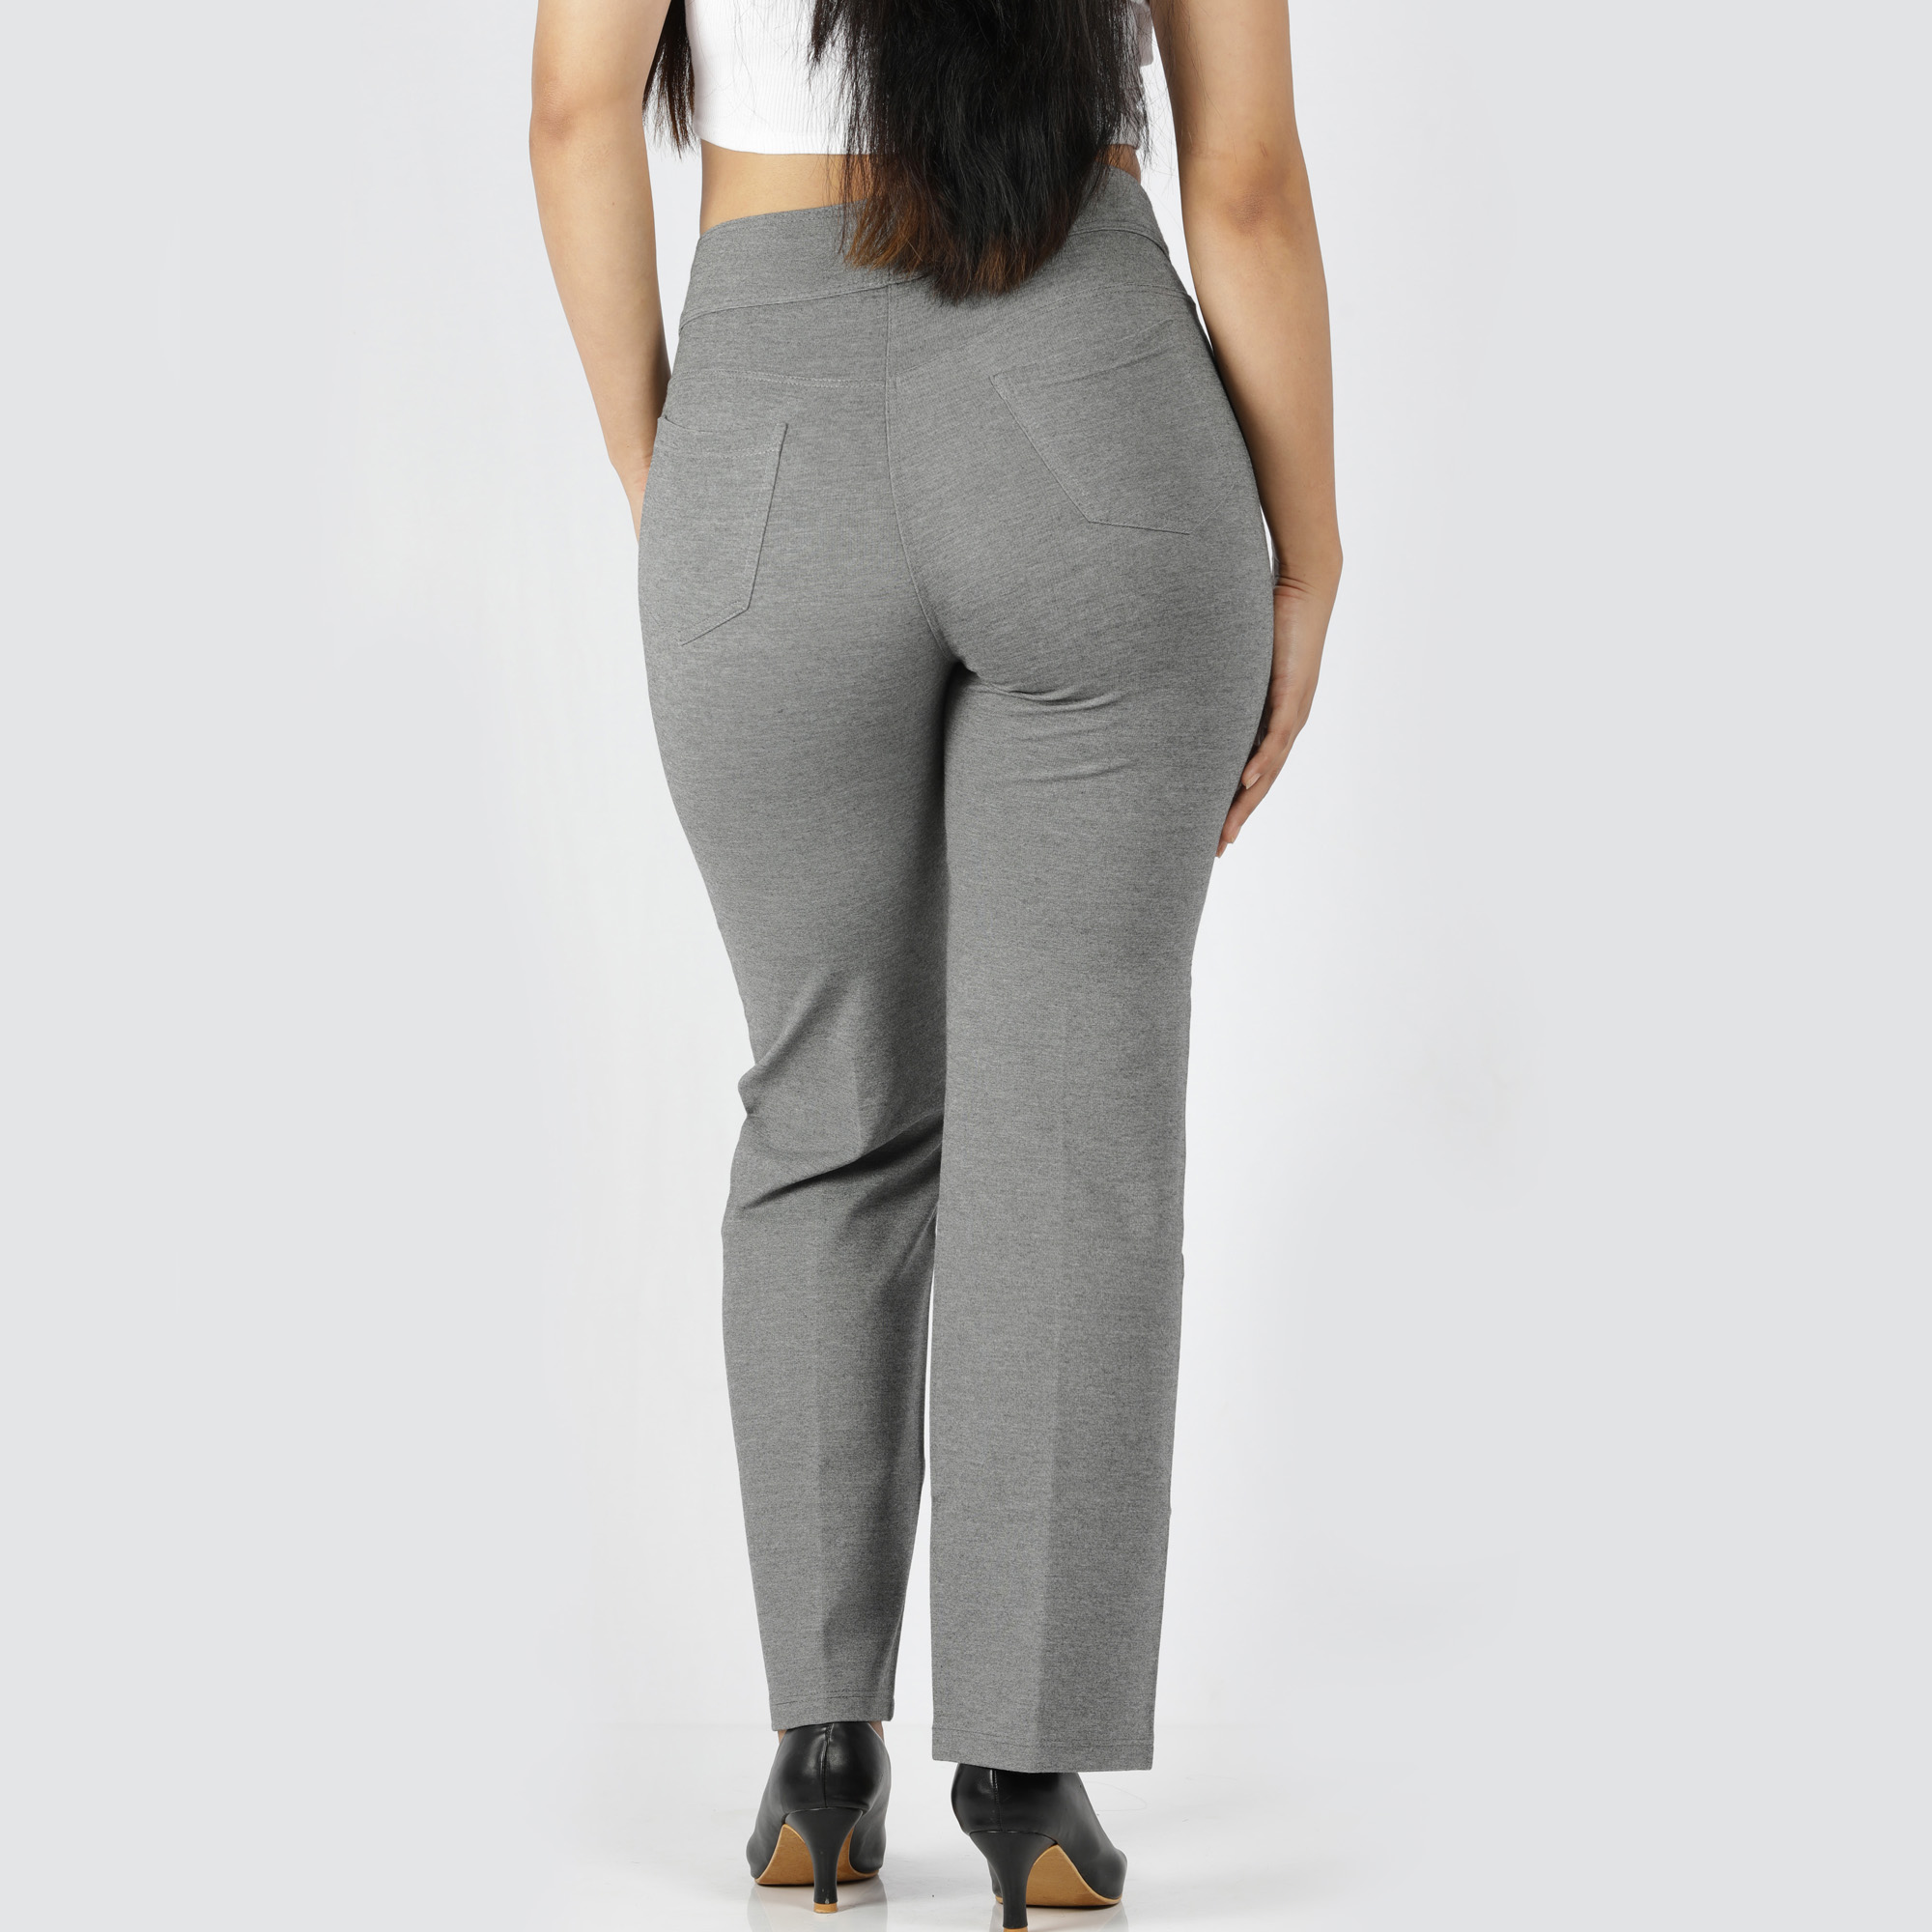 Buy Belore Slims Plus size tummy tucker straight leg pant for